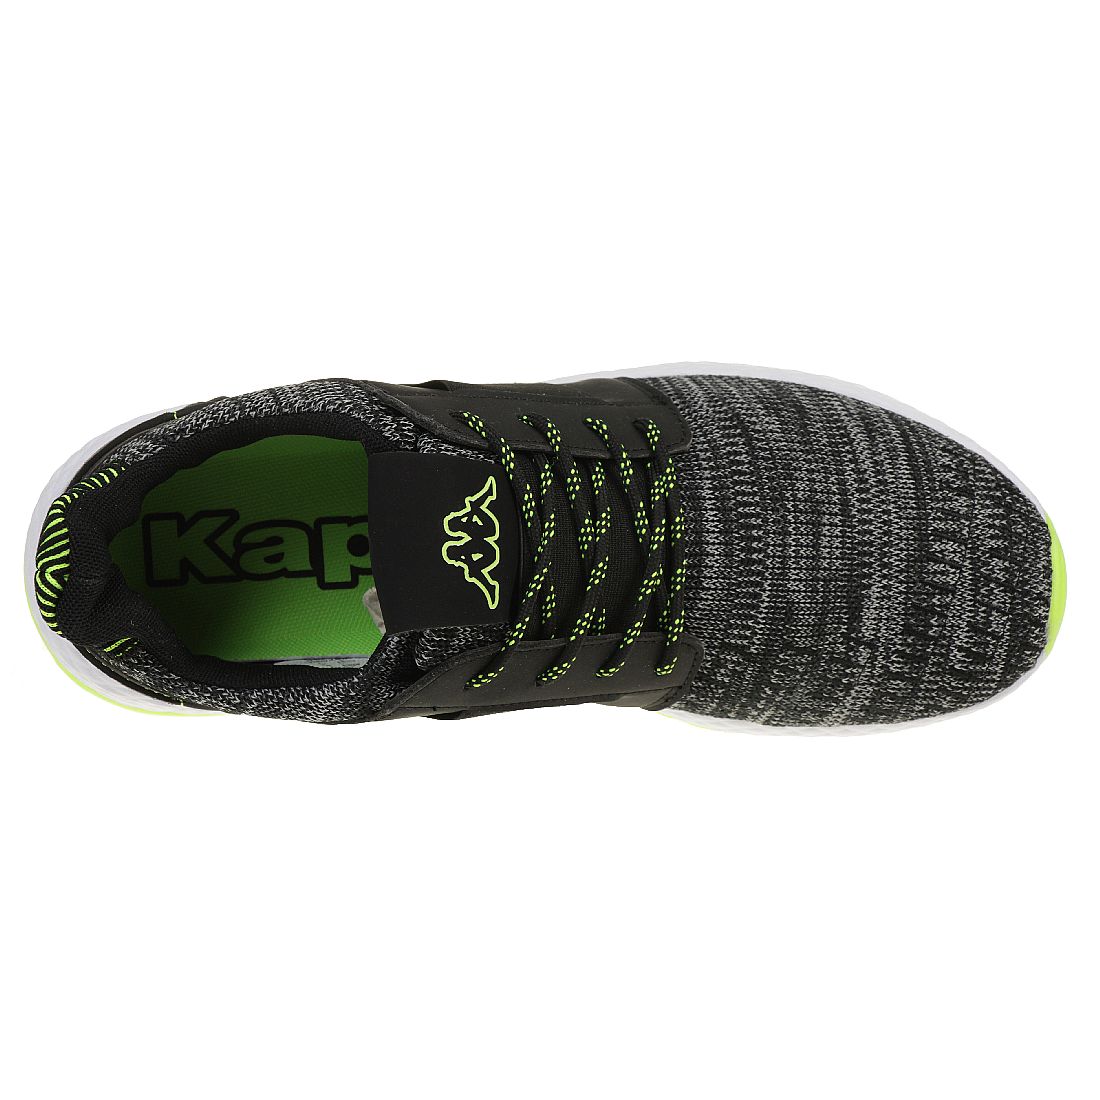 Kappa FEENY Sneaker Unisex Turnschuhe Schuhe schwarz/grün 242683